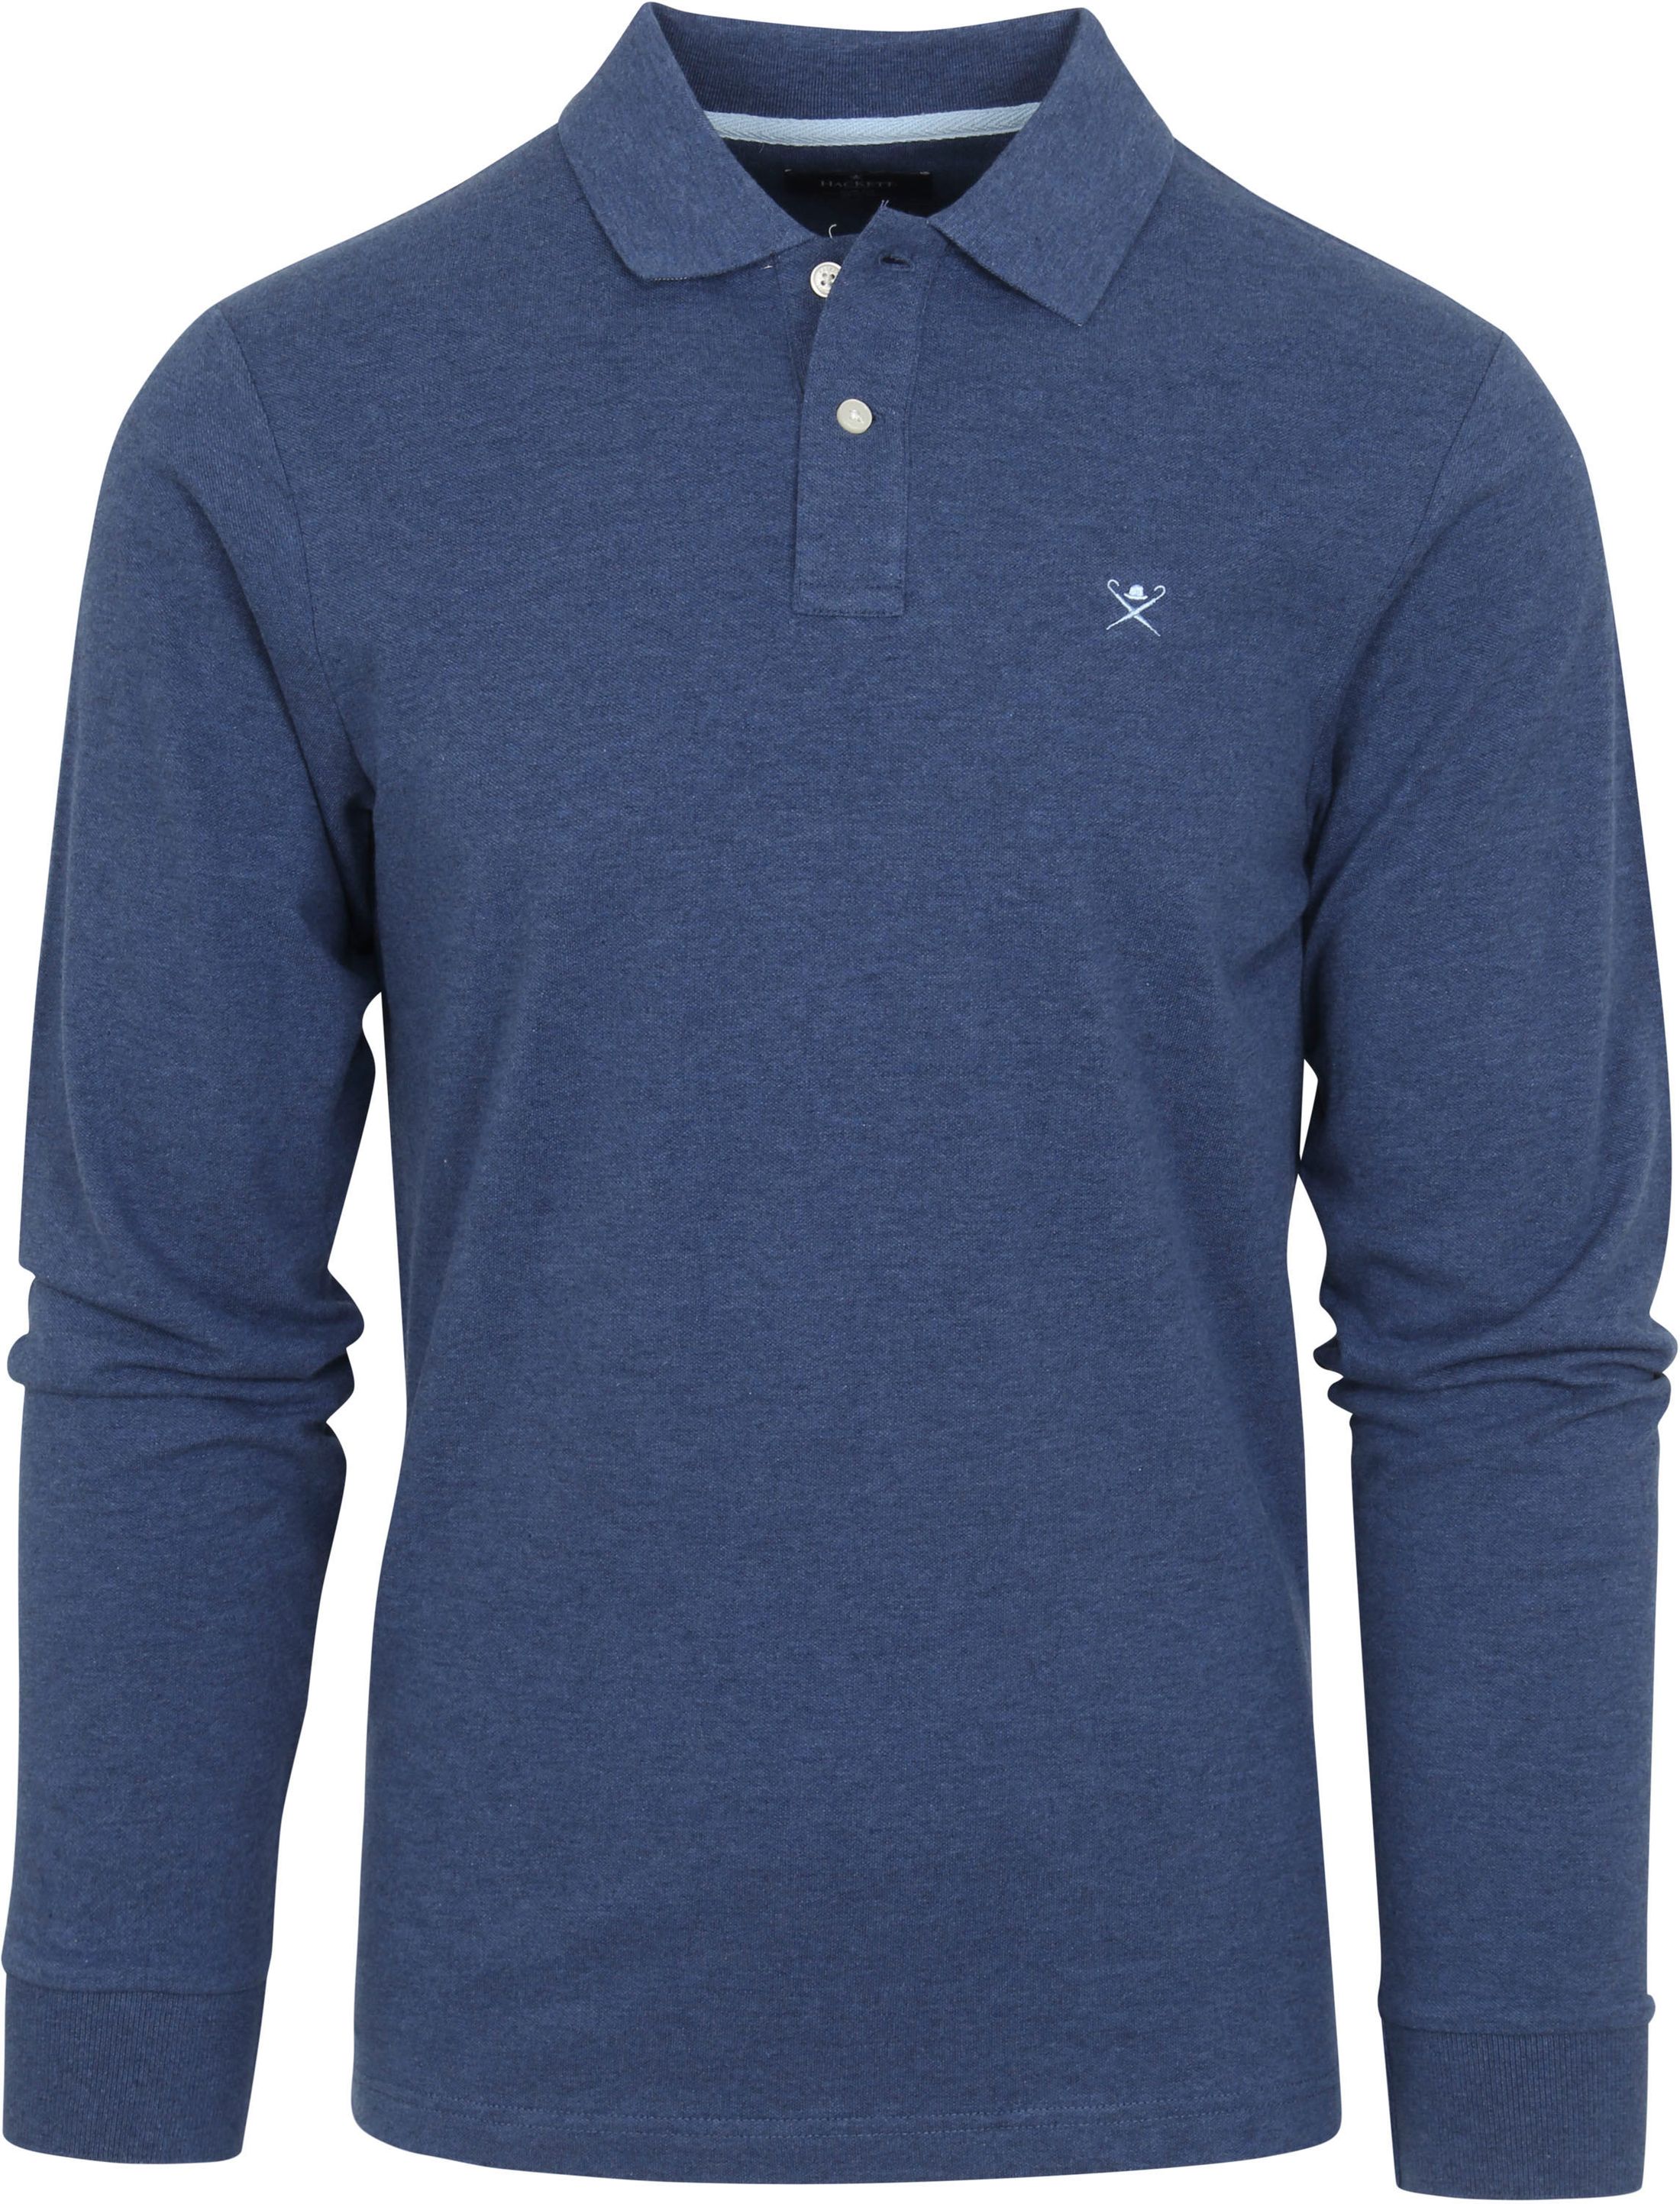 Hackett LS Polo Shirt Aqua Blue size XL